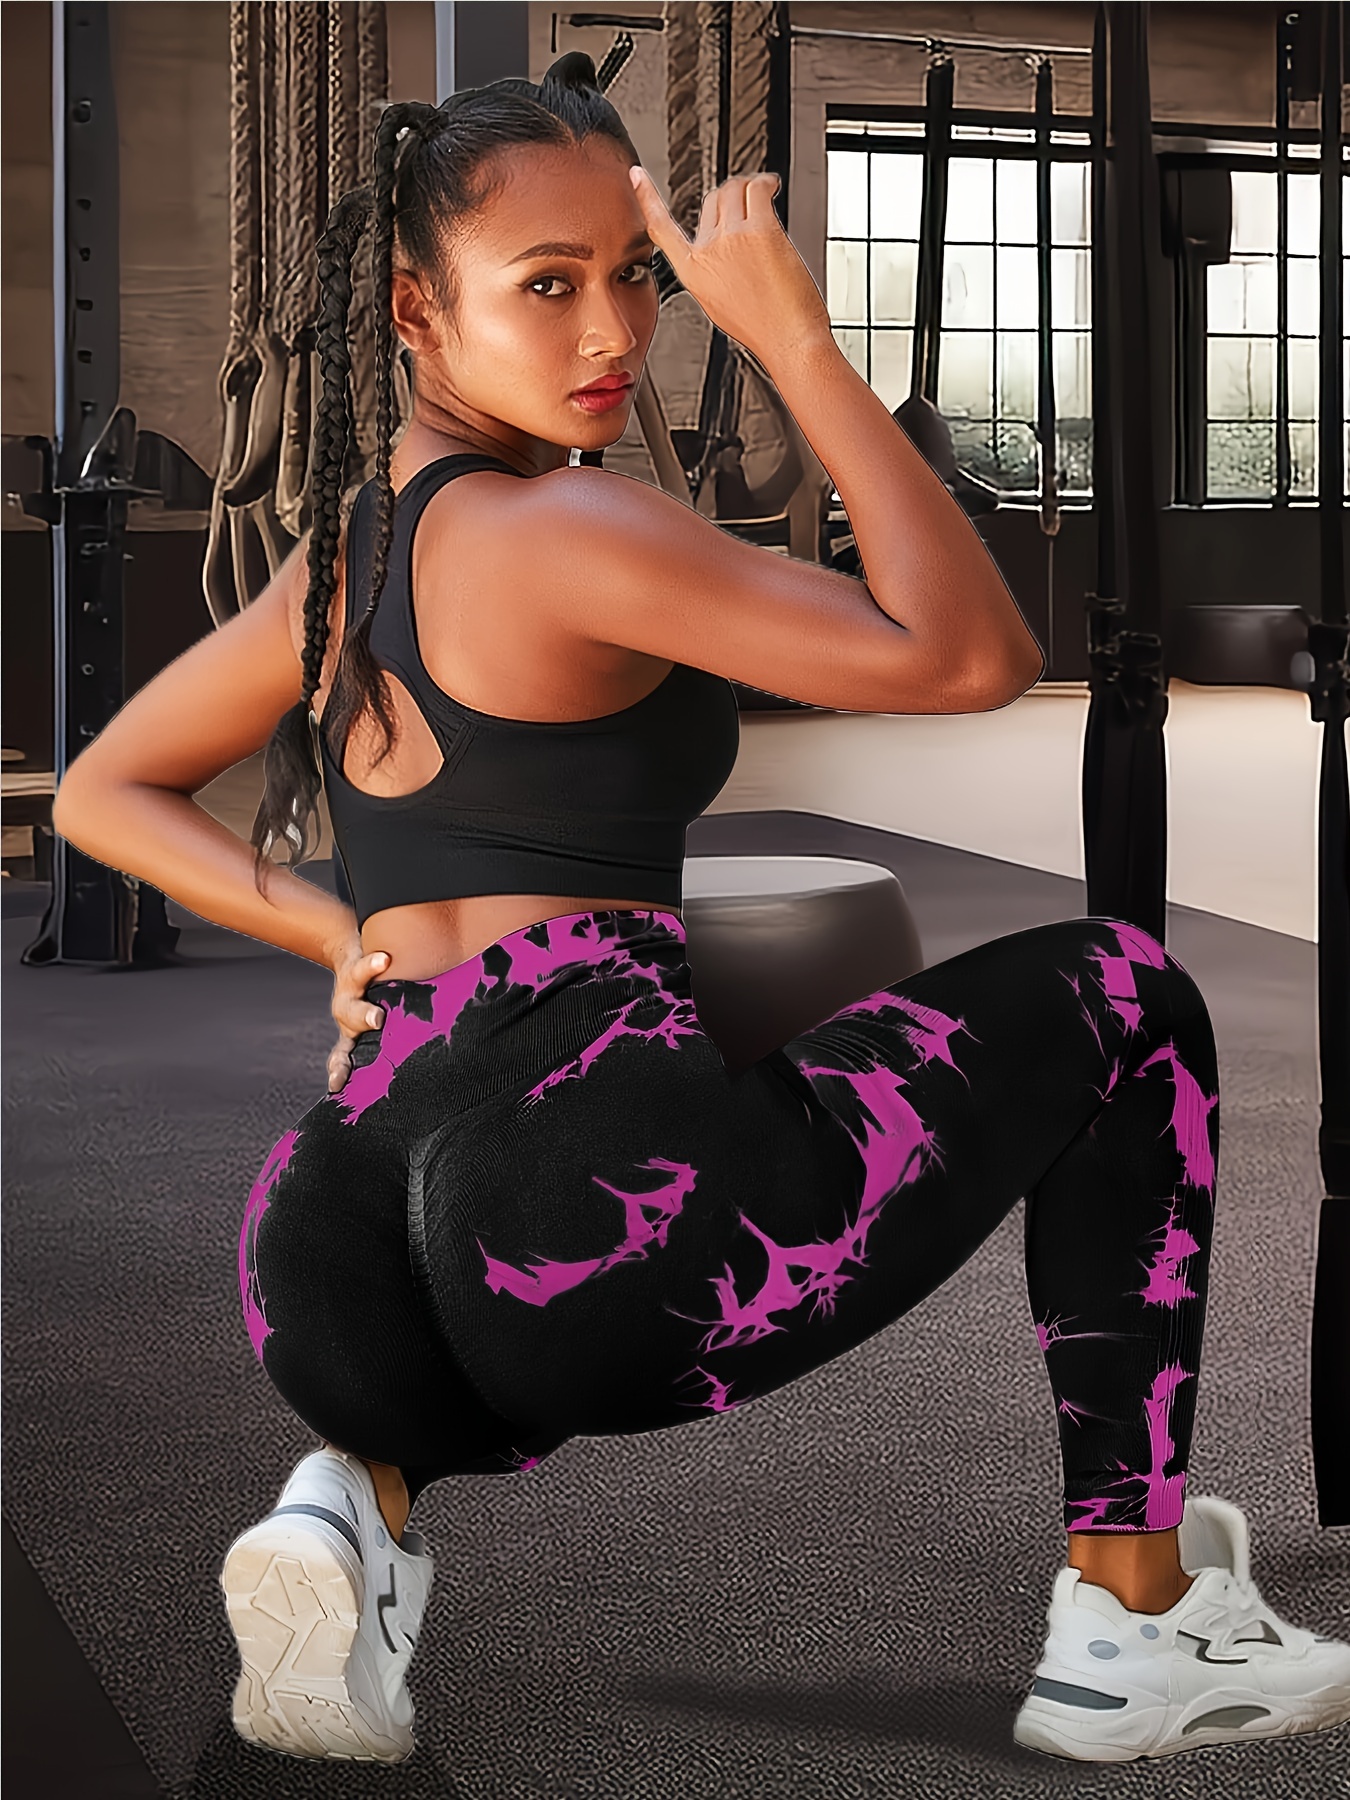 Leggins Deportivas Ropa Deportiva De Moda Licras Para Pantalones Yoga Mujer  New